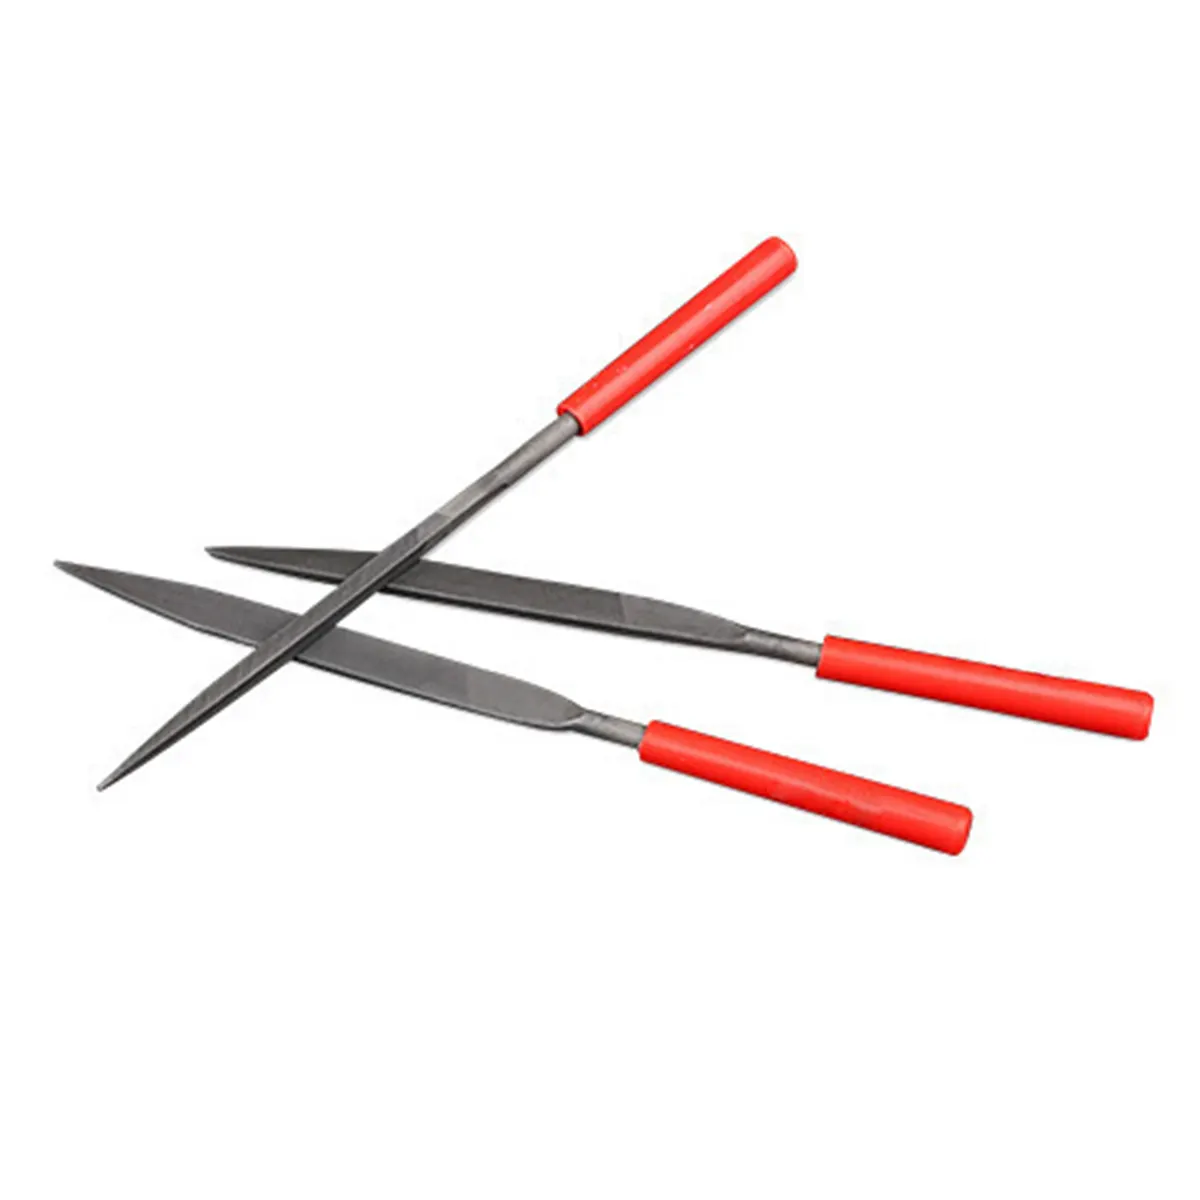 10 Pcs Professional Finishing Tools Hardened Steel Slim Mini Needle File Set